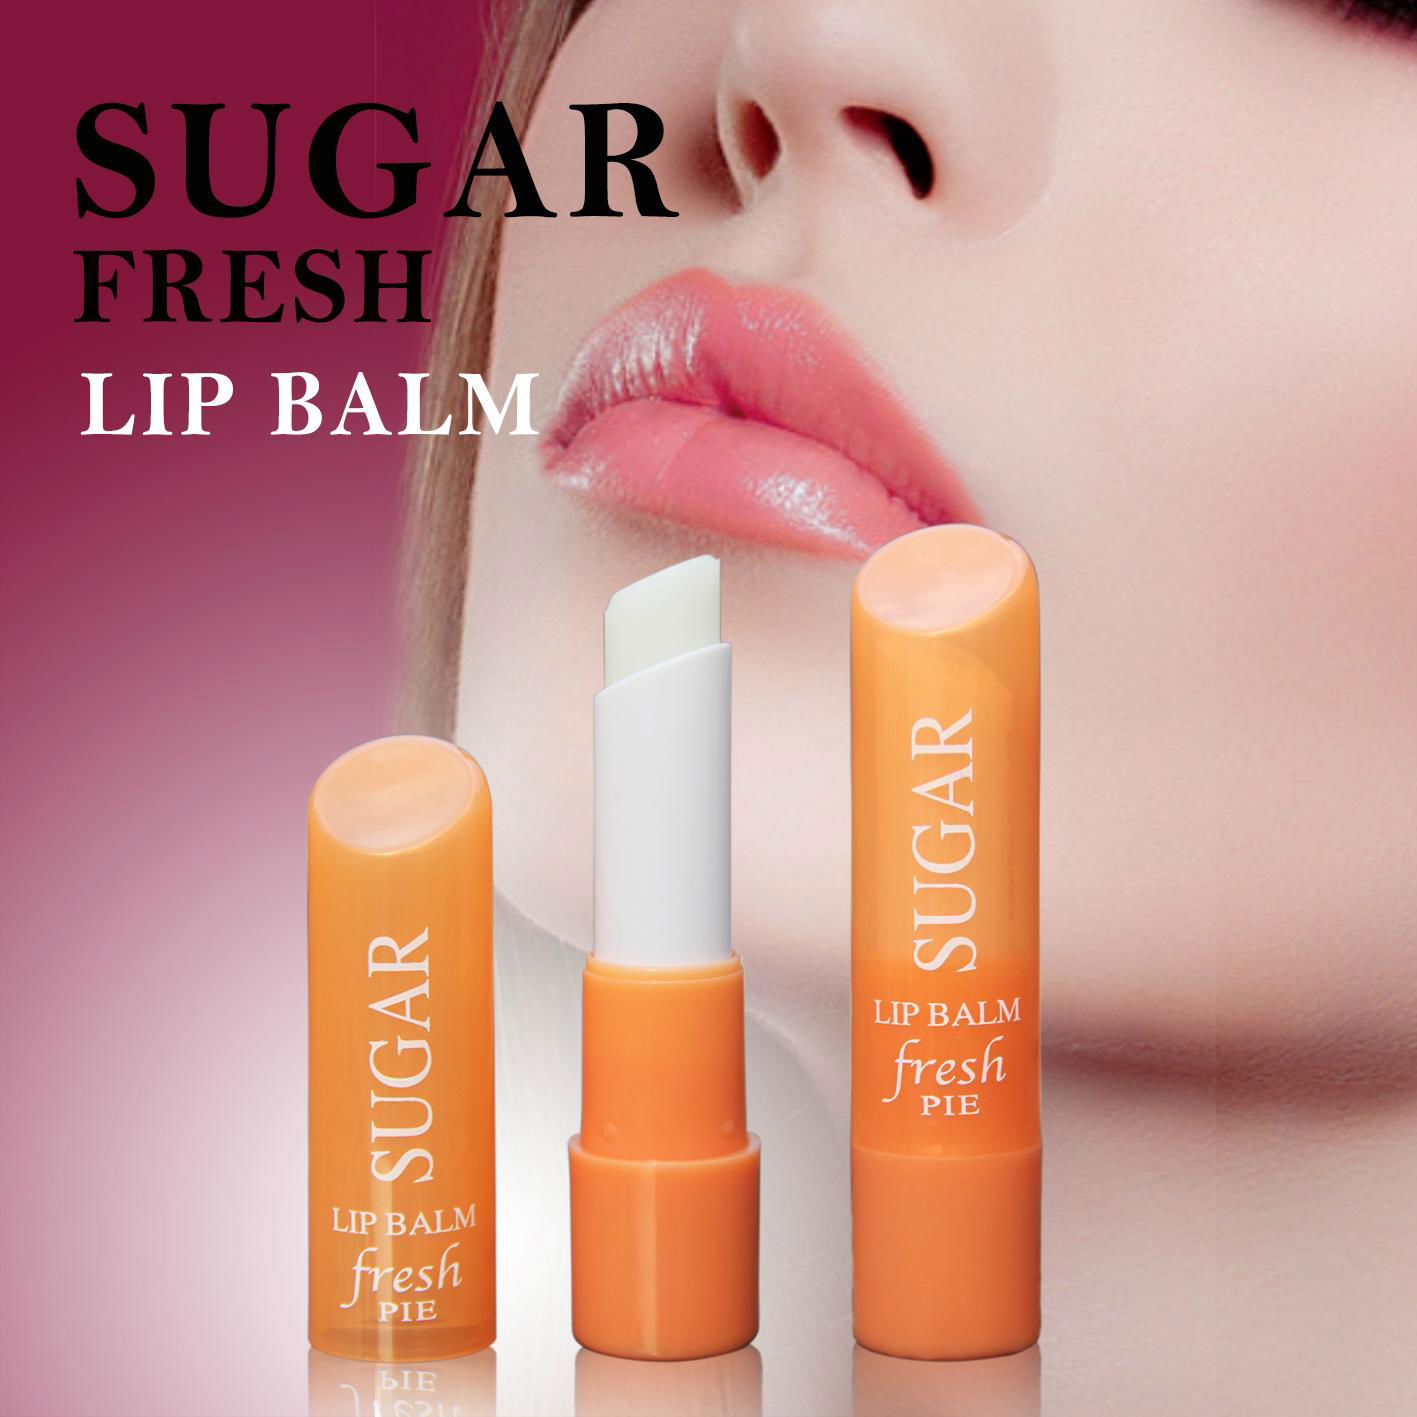 Sugar Fresh Lip Balm